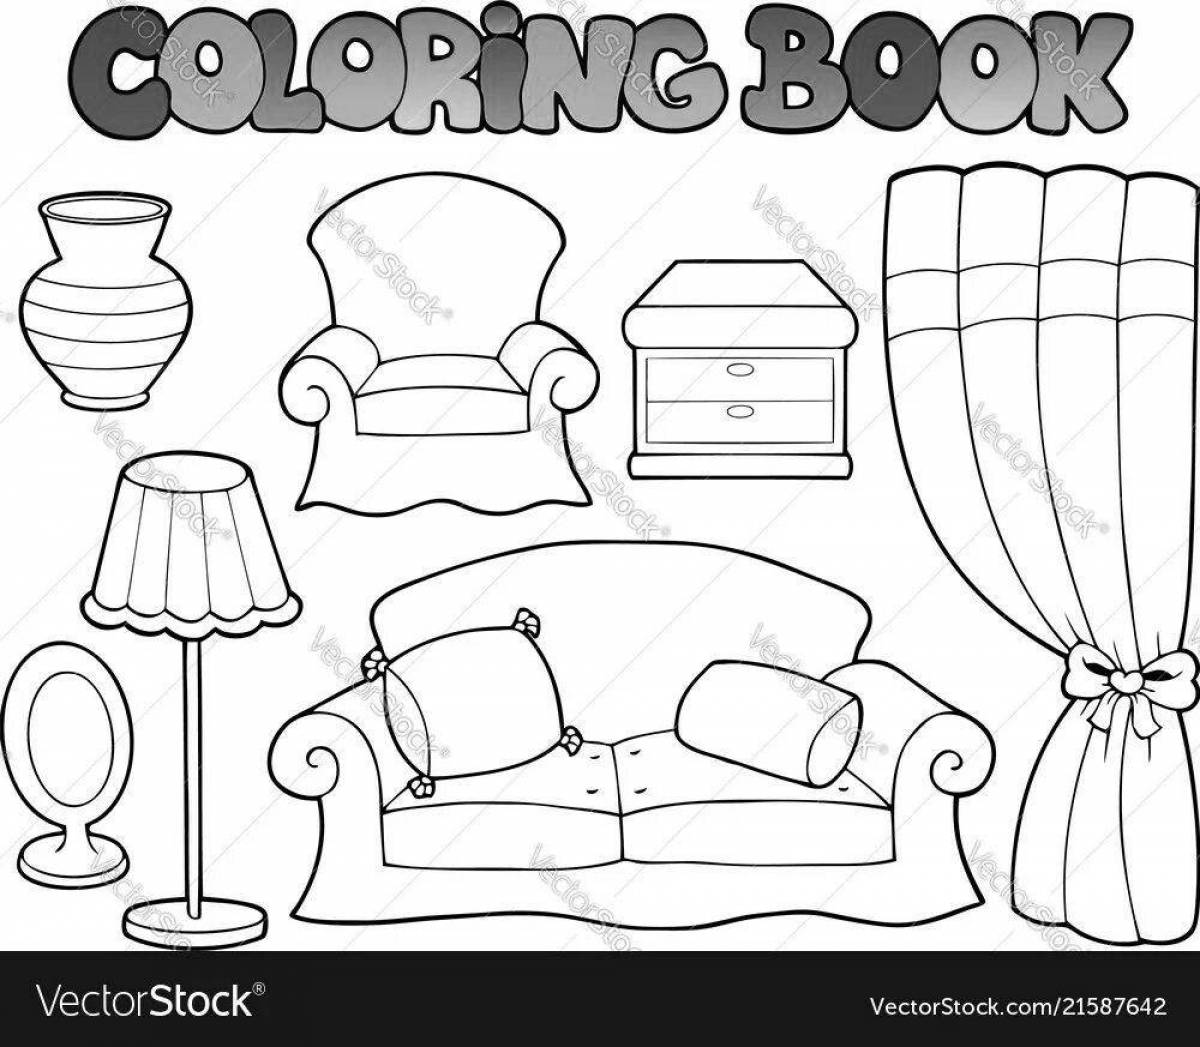 Colouring cozy furniture